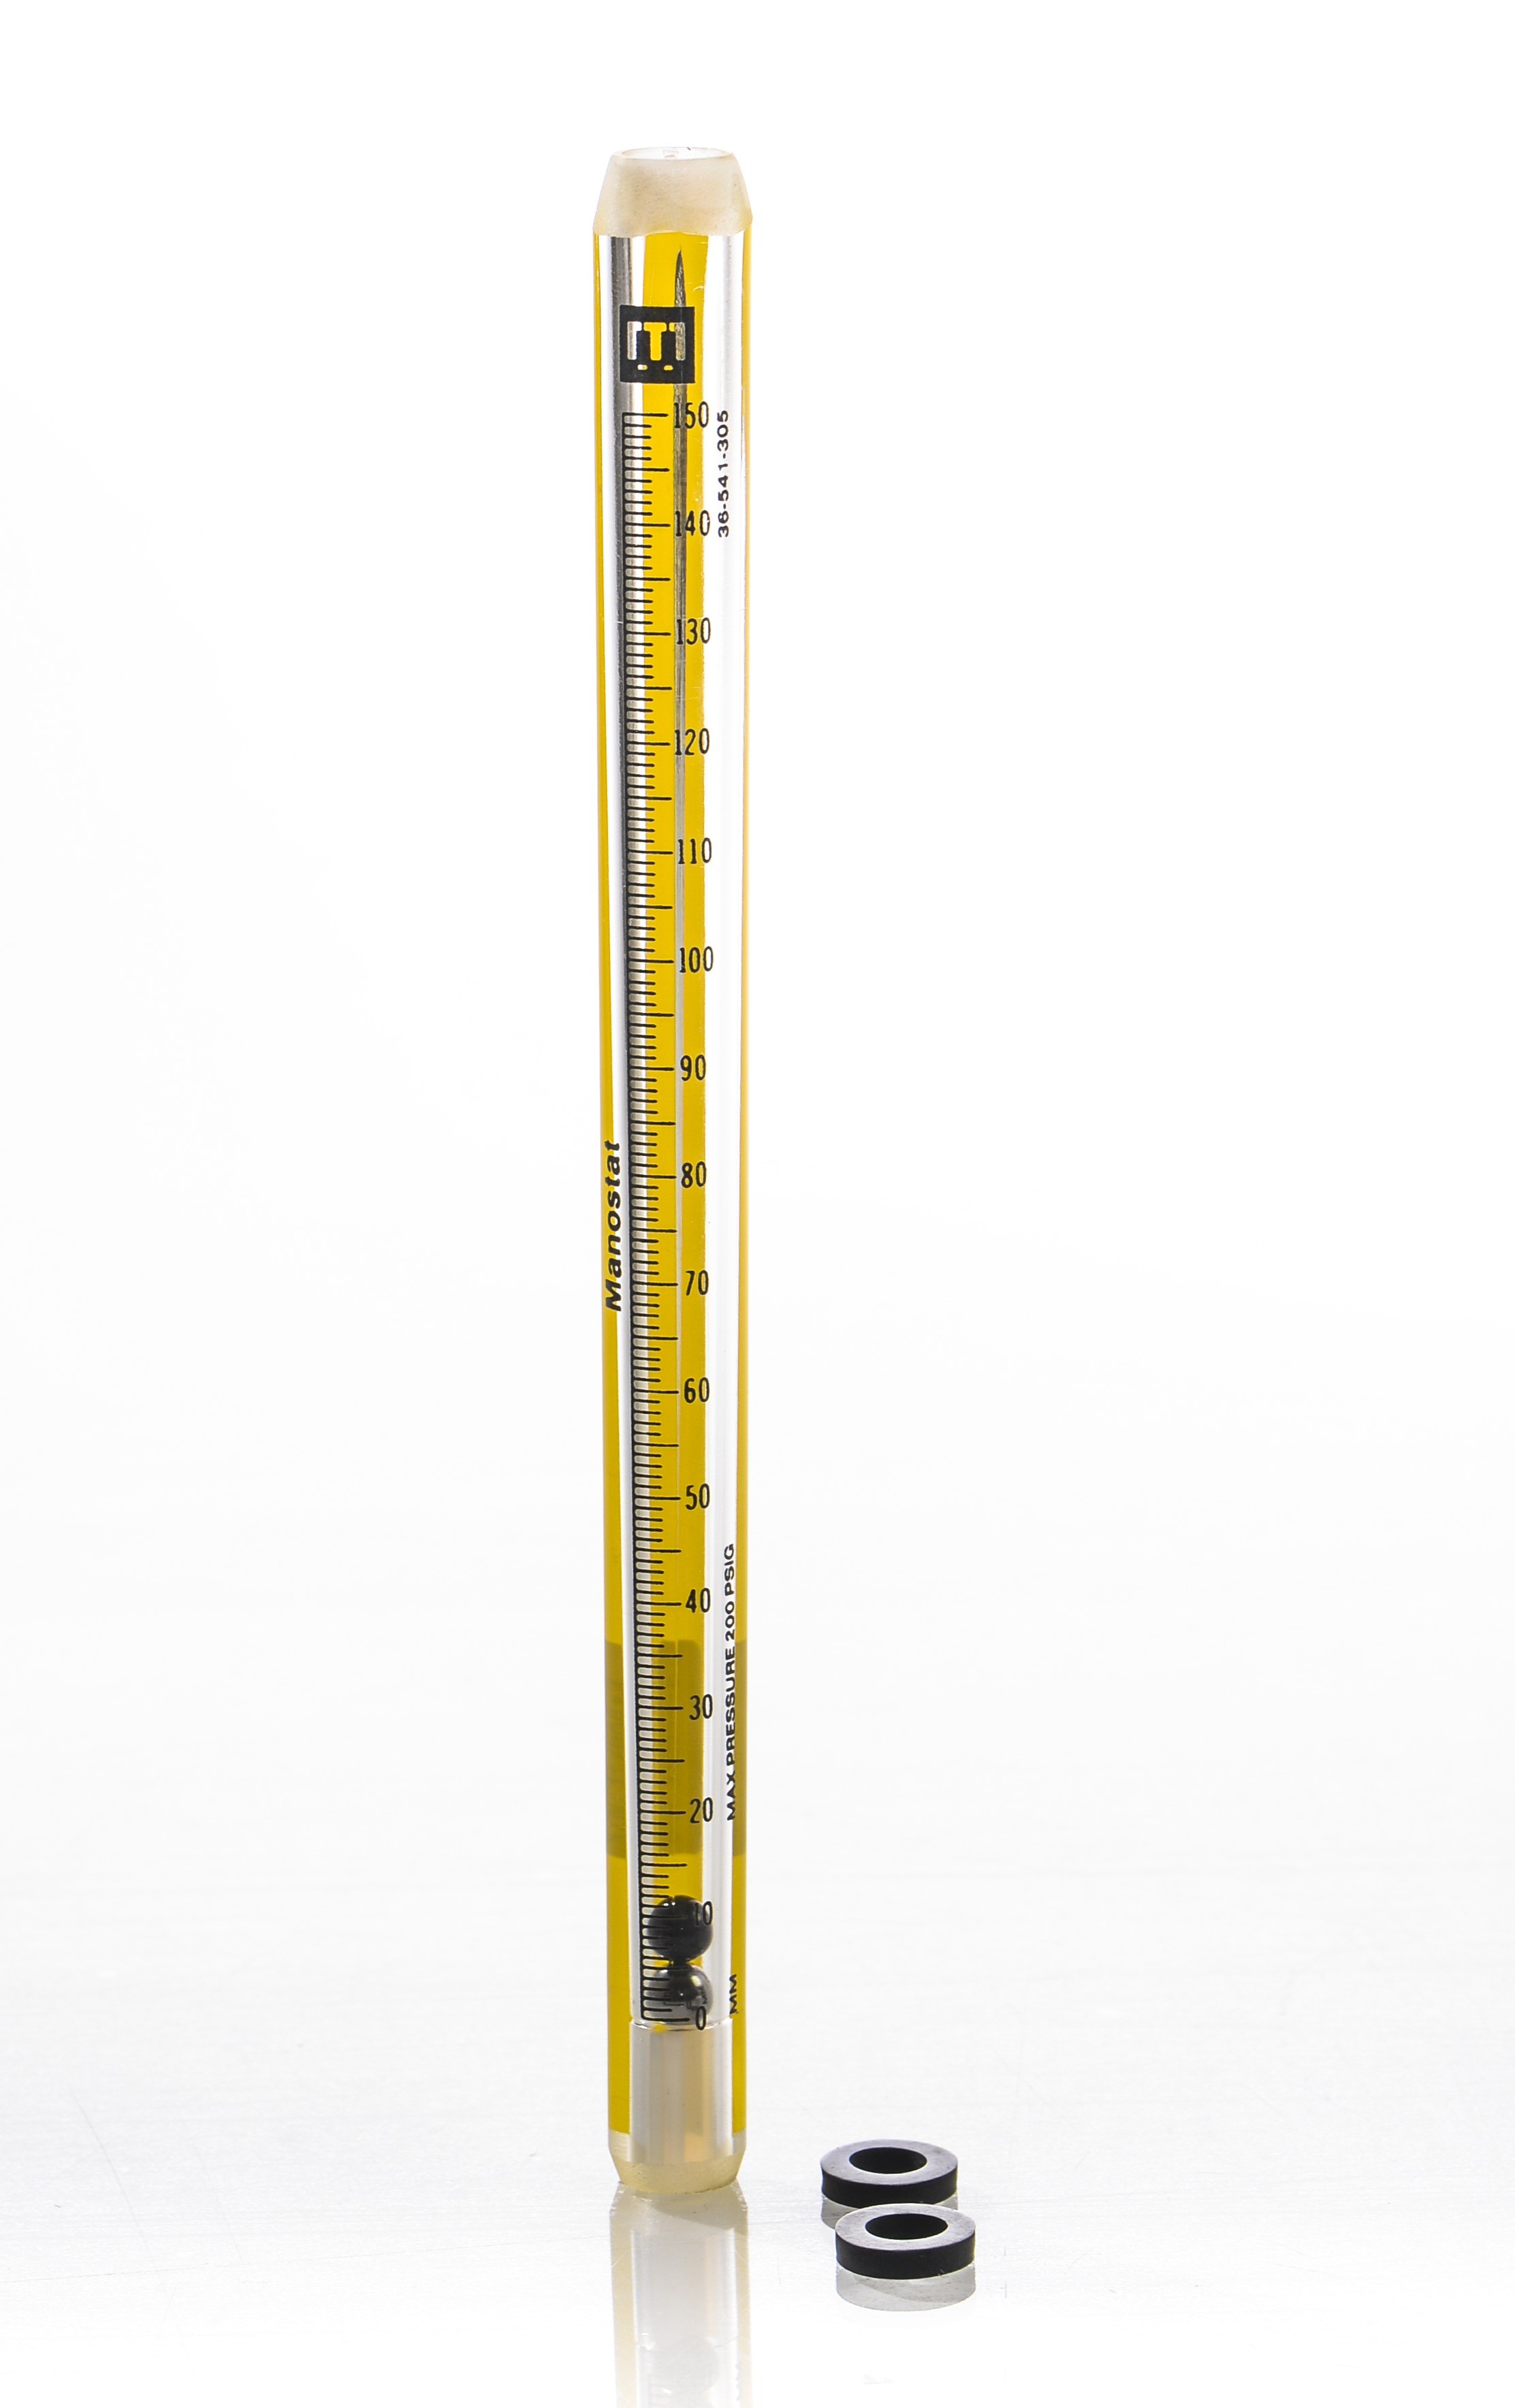 SP Bel-Art Riteflow Borosilicate Glass Unmounted Flowmeter; 150mm Scale, Size 5